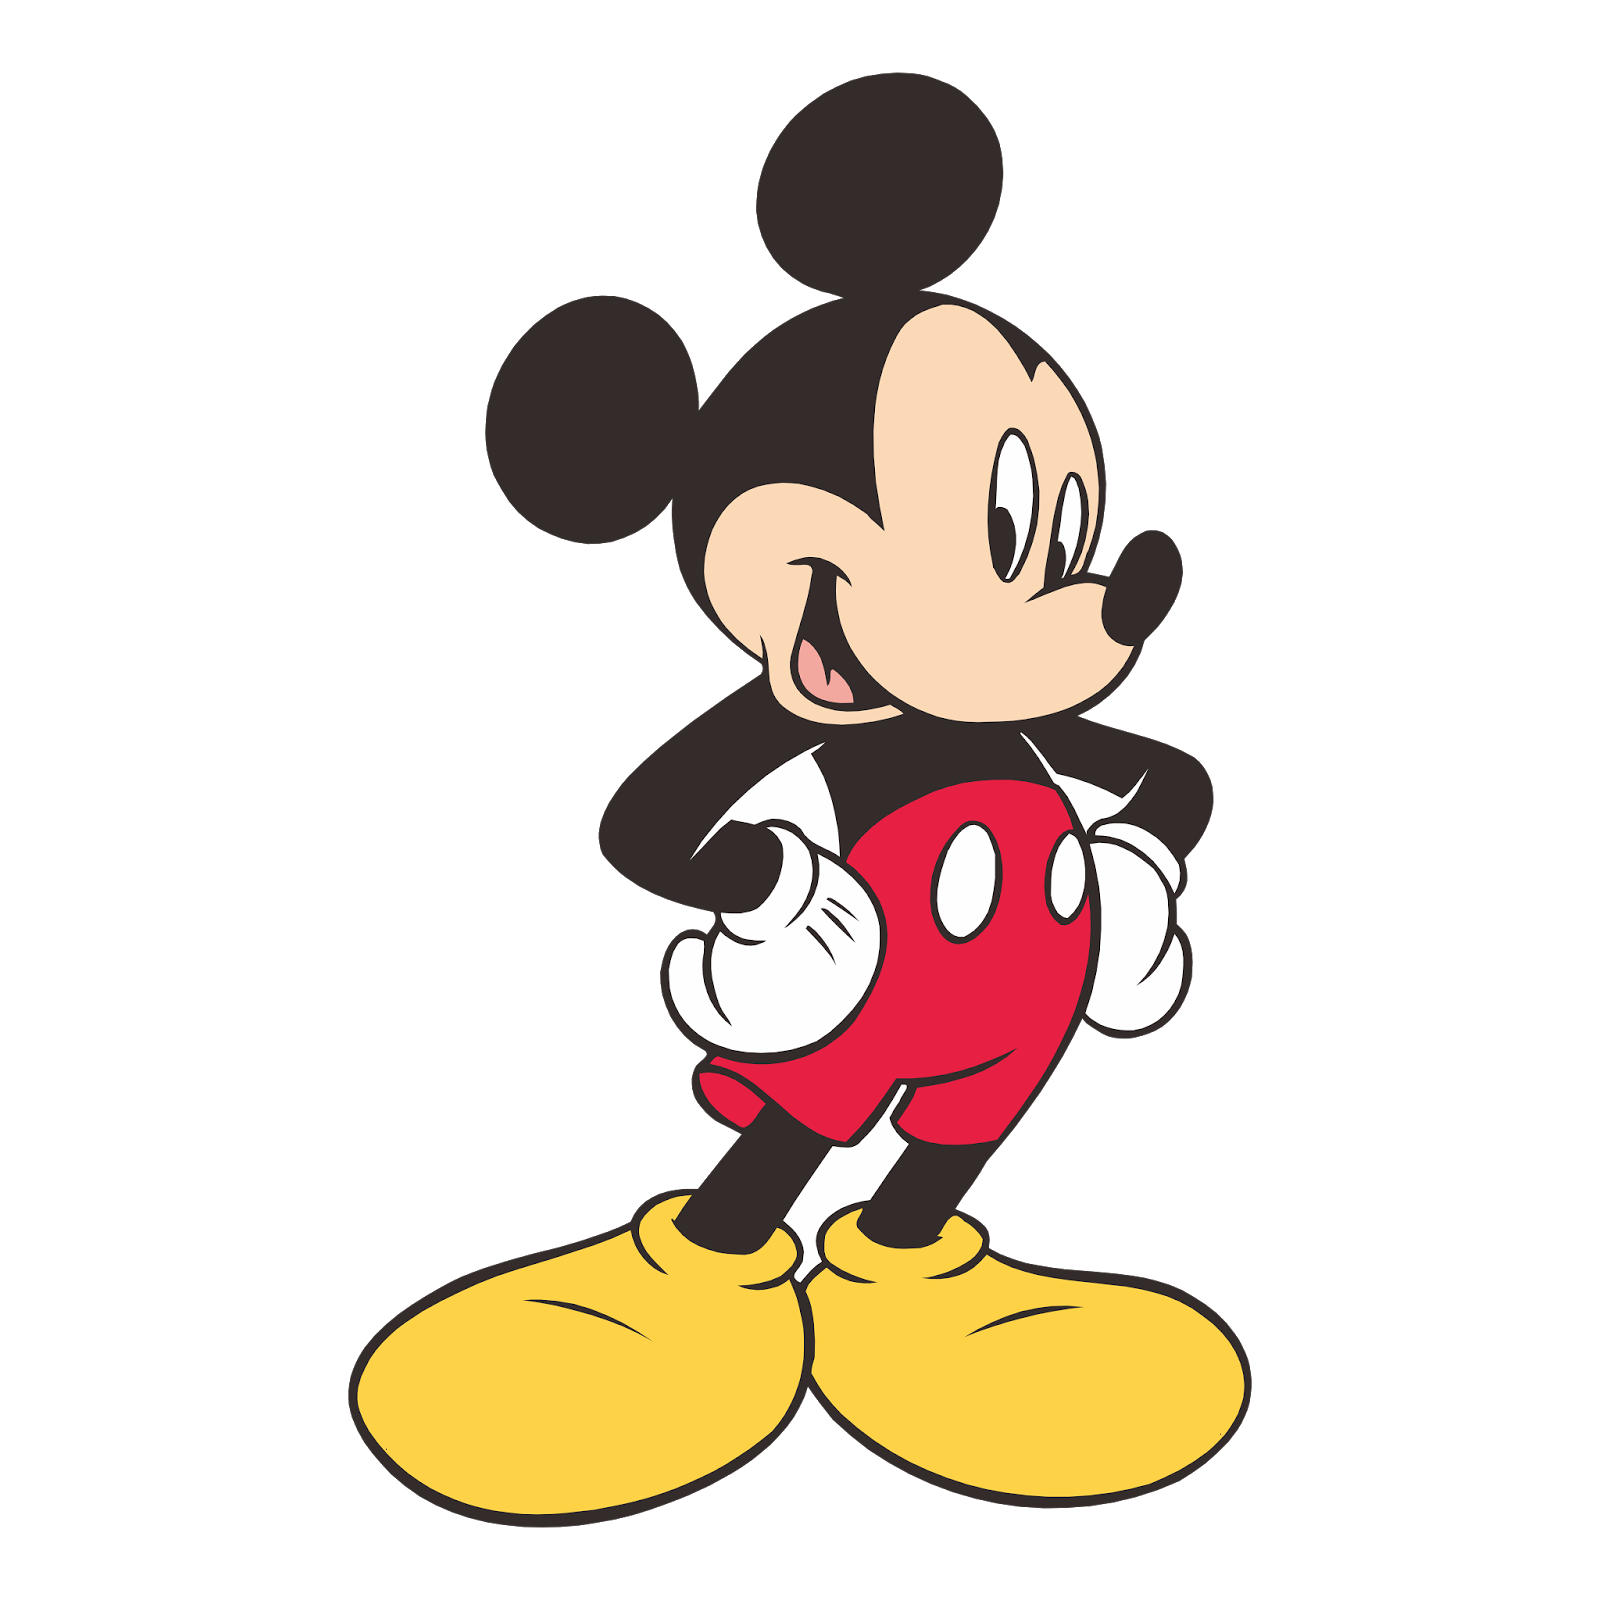  Siap Cetak Gambar  Sketsa  Mickey  Mouse  Gambar  Mewarnai